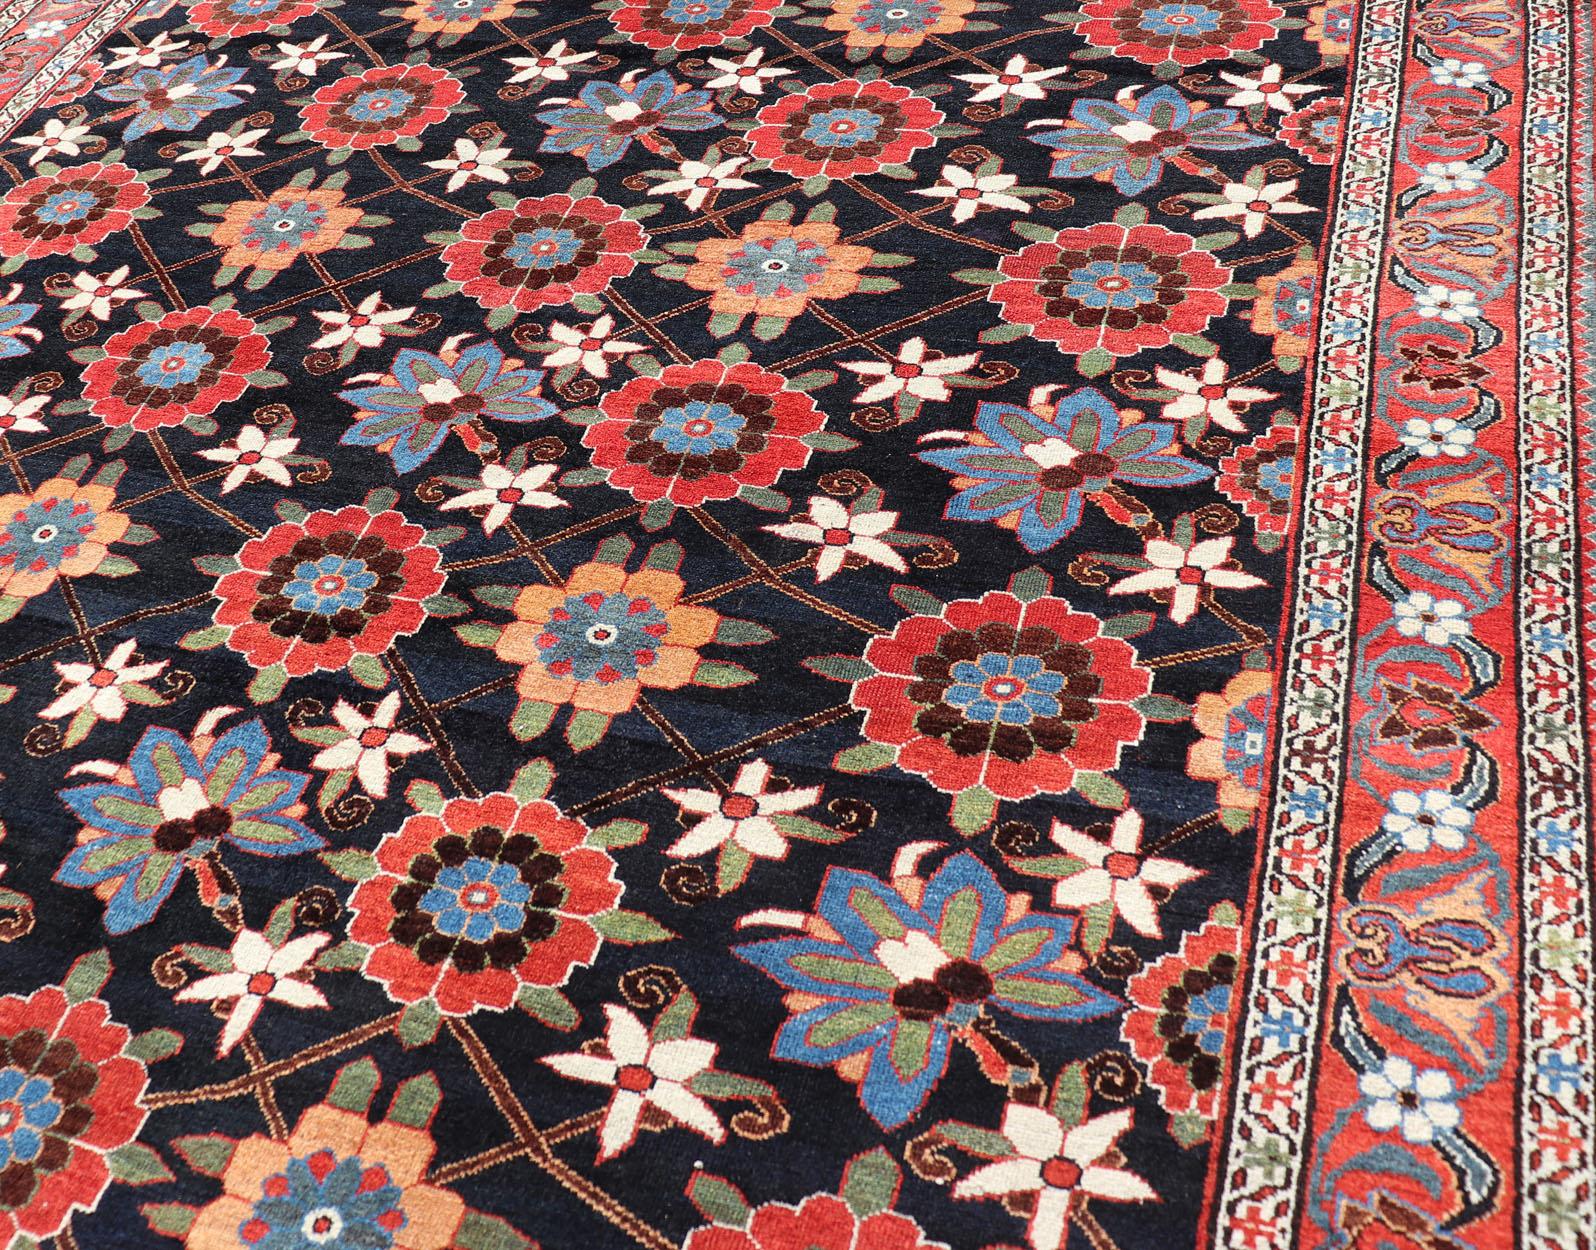 Antique Bakhtiari rug in All-Over flower design hand knotted wool gallery rug in multi colors. Keivan Woven Arts / rug EMB-9581-P13887, origin / type: Iran / Bakhtiari, circa 1920


Measures:7'6 x 13'6.